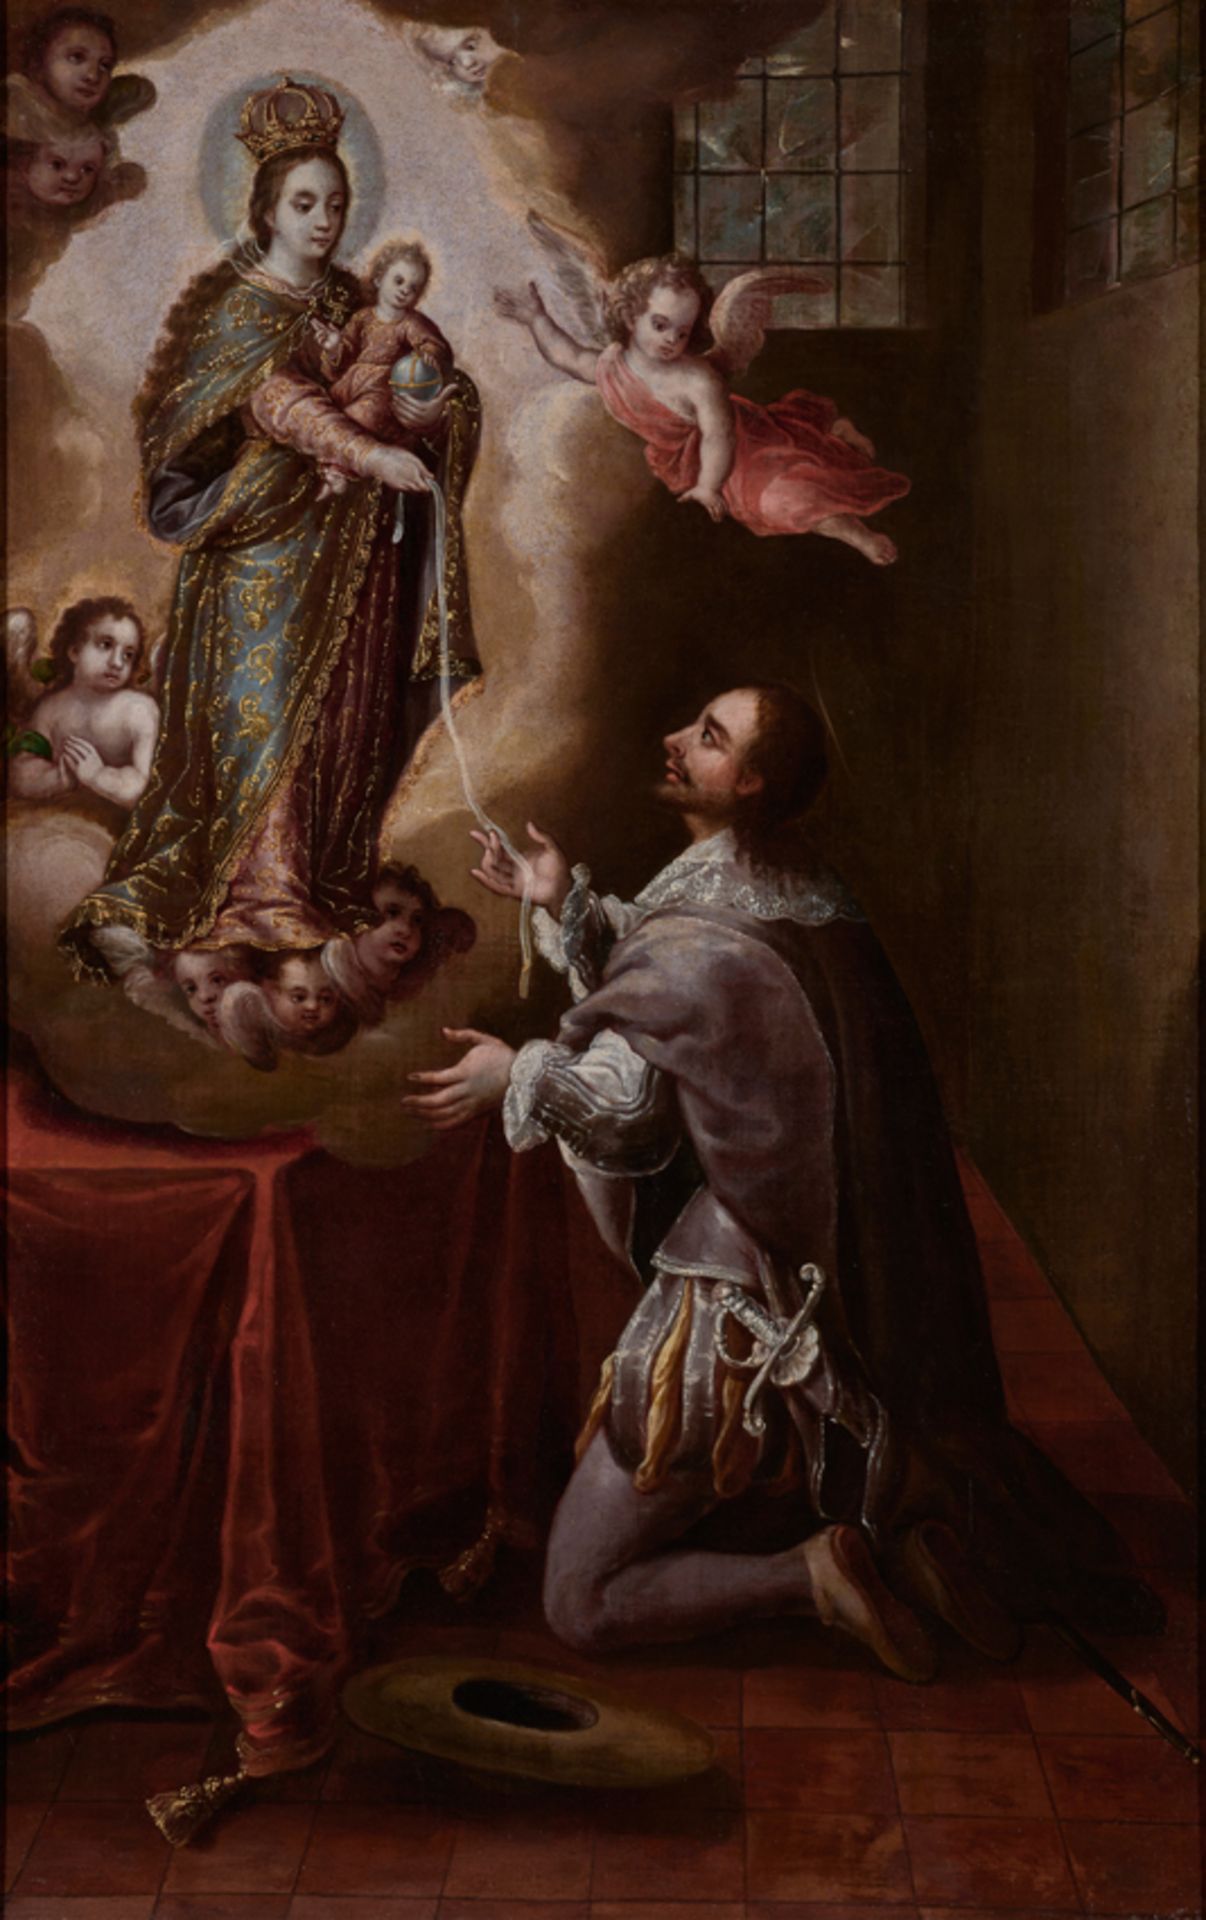 Attributed to Juan Correa (Mexico City, 1646 - 1716)